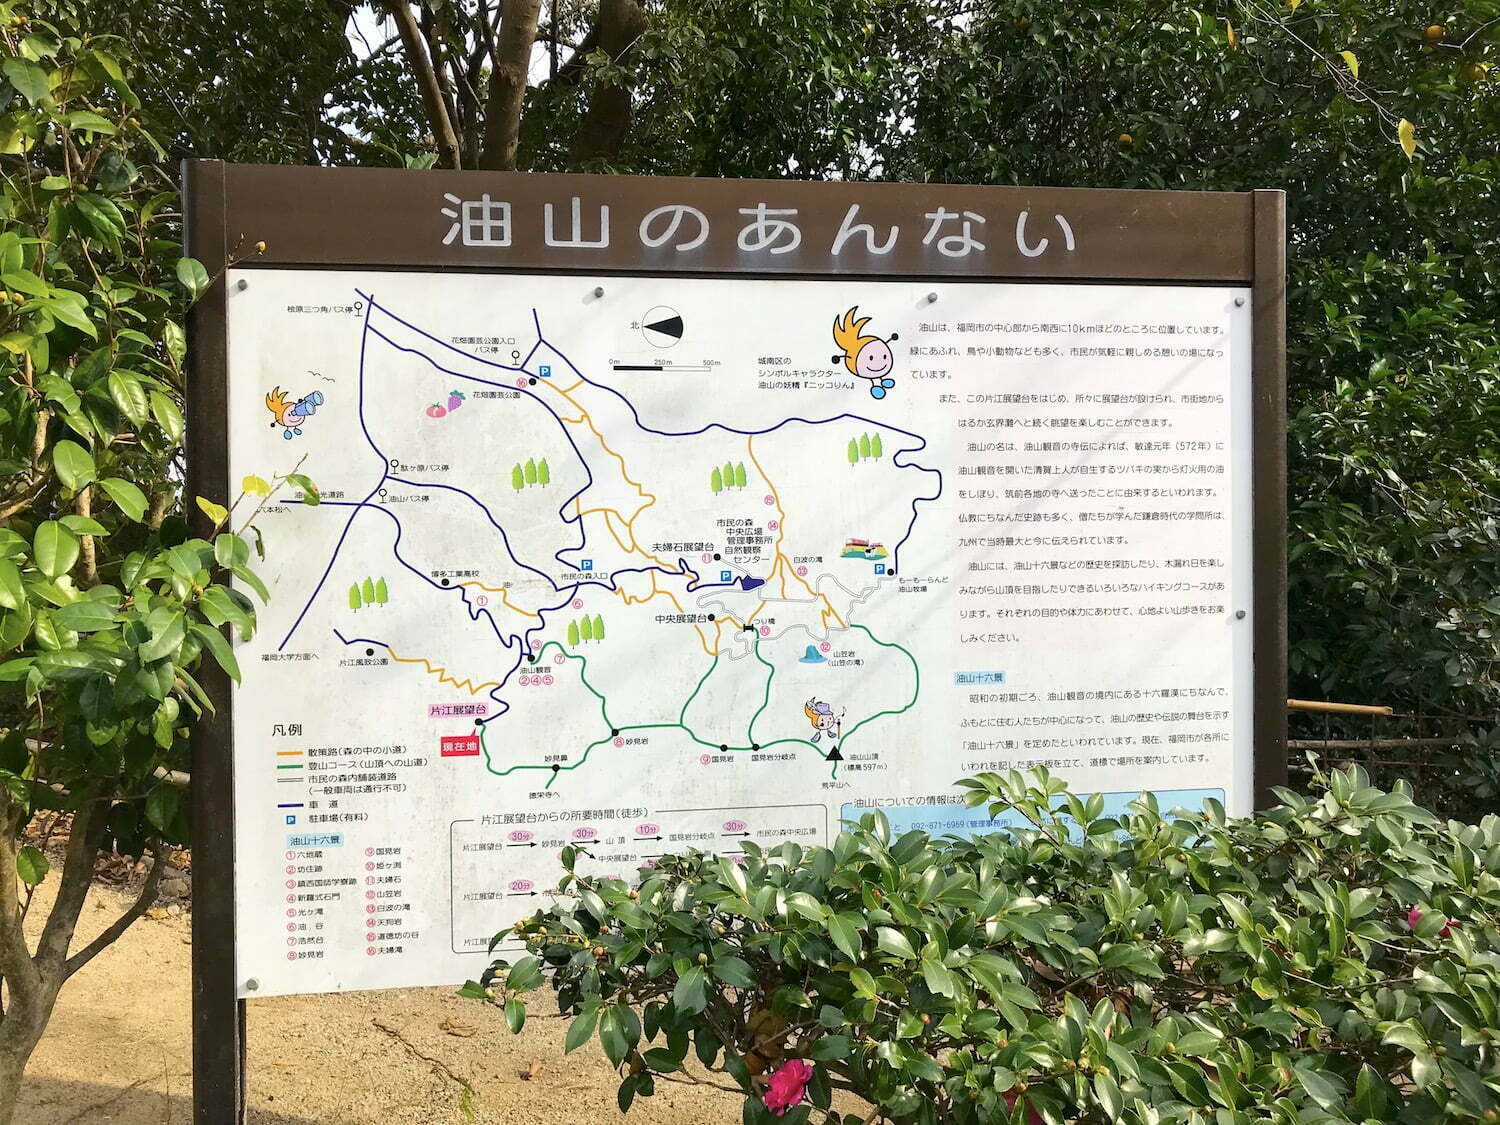 Aburayama Park, Fukuoka